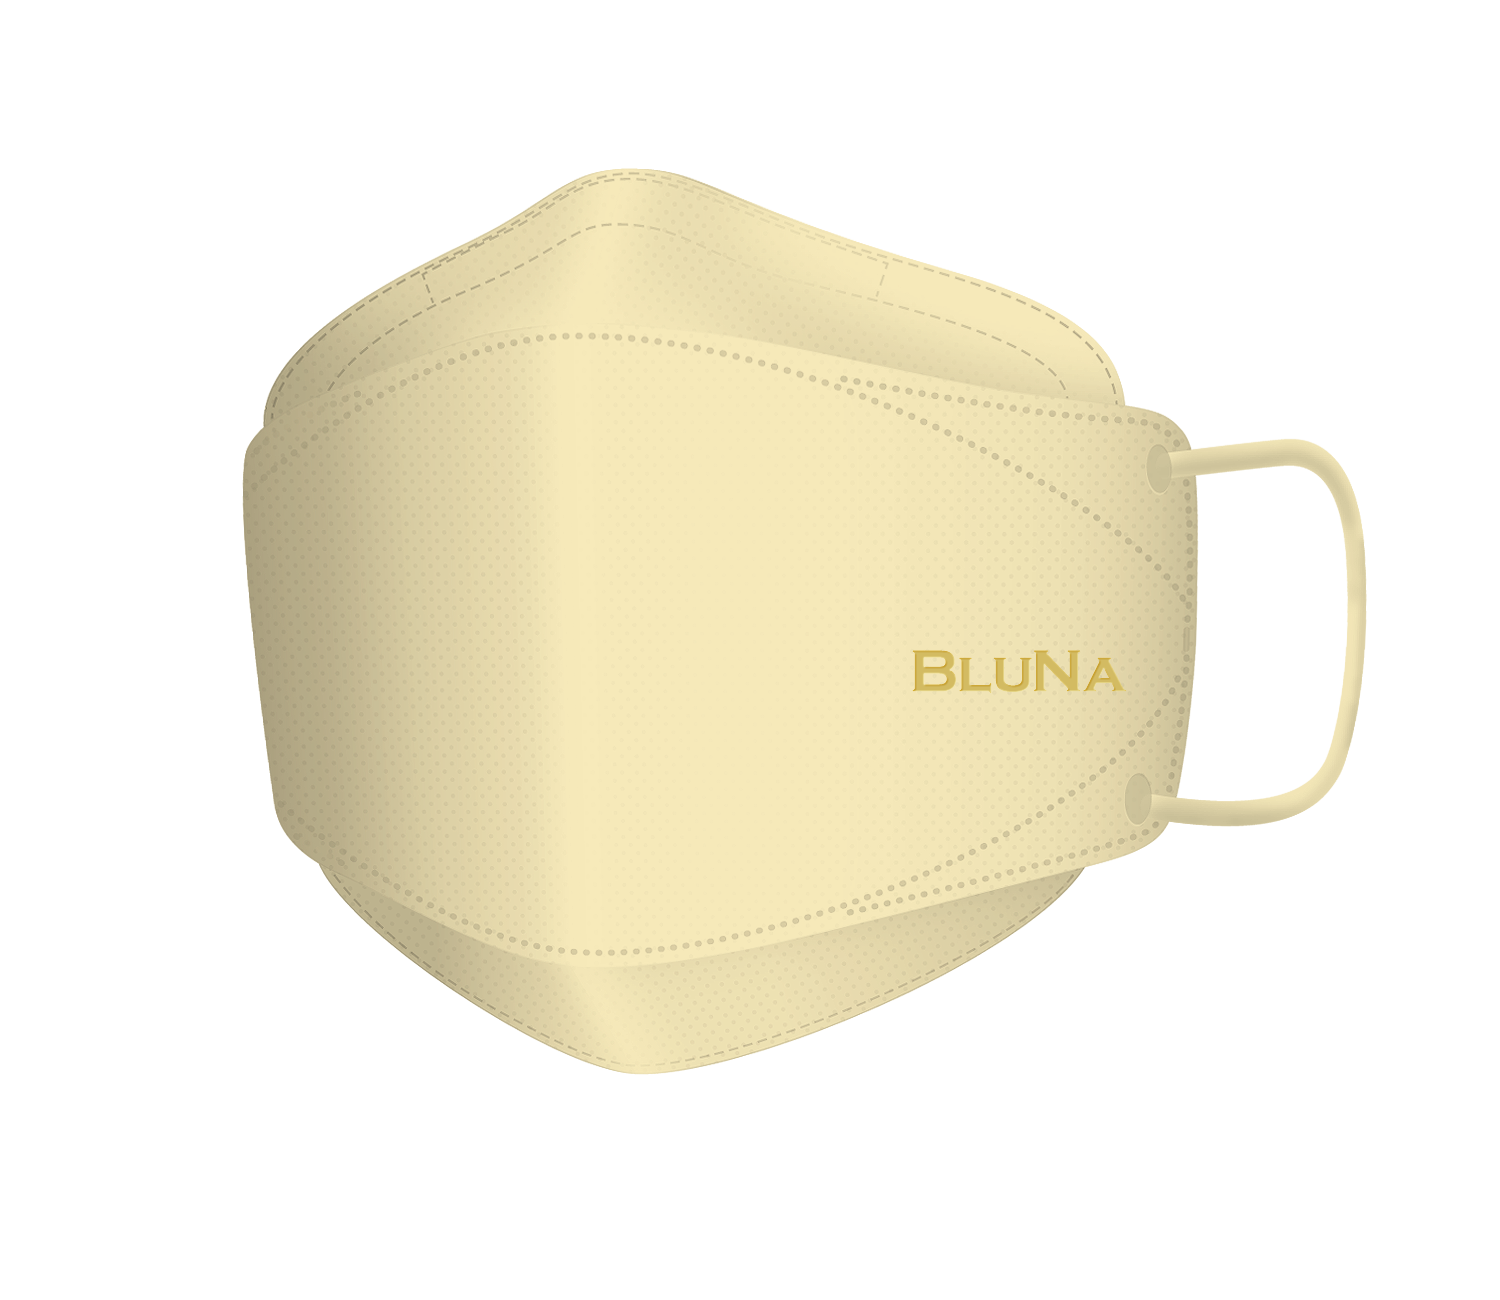 BLUNA 3D Adult Style Mask, Camellia Colour, BFE 99.9%